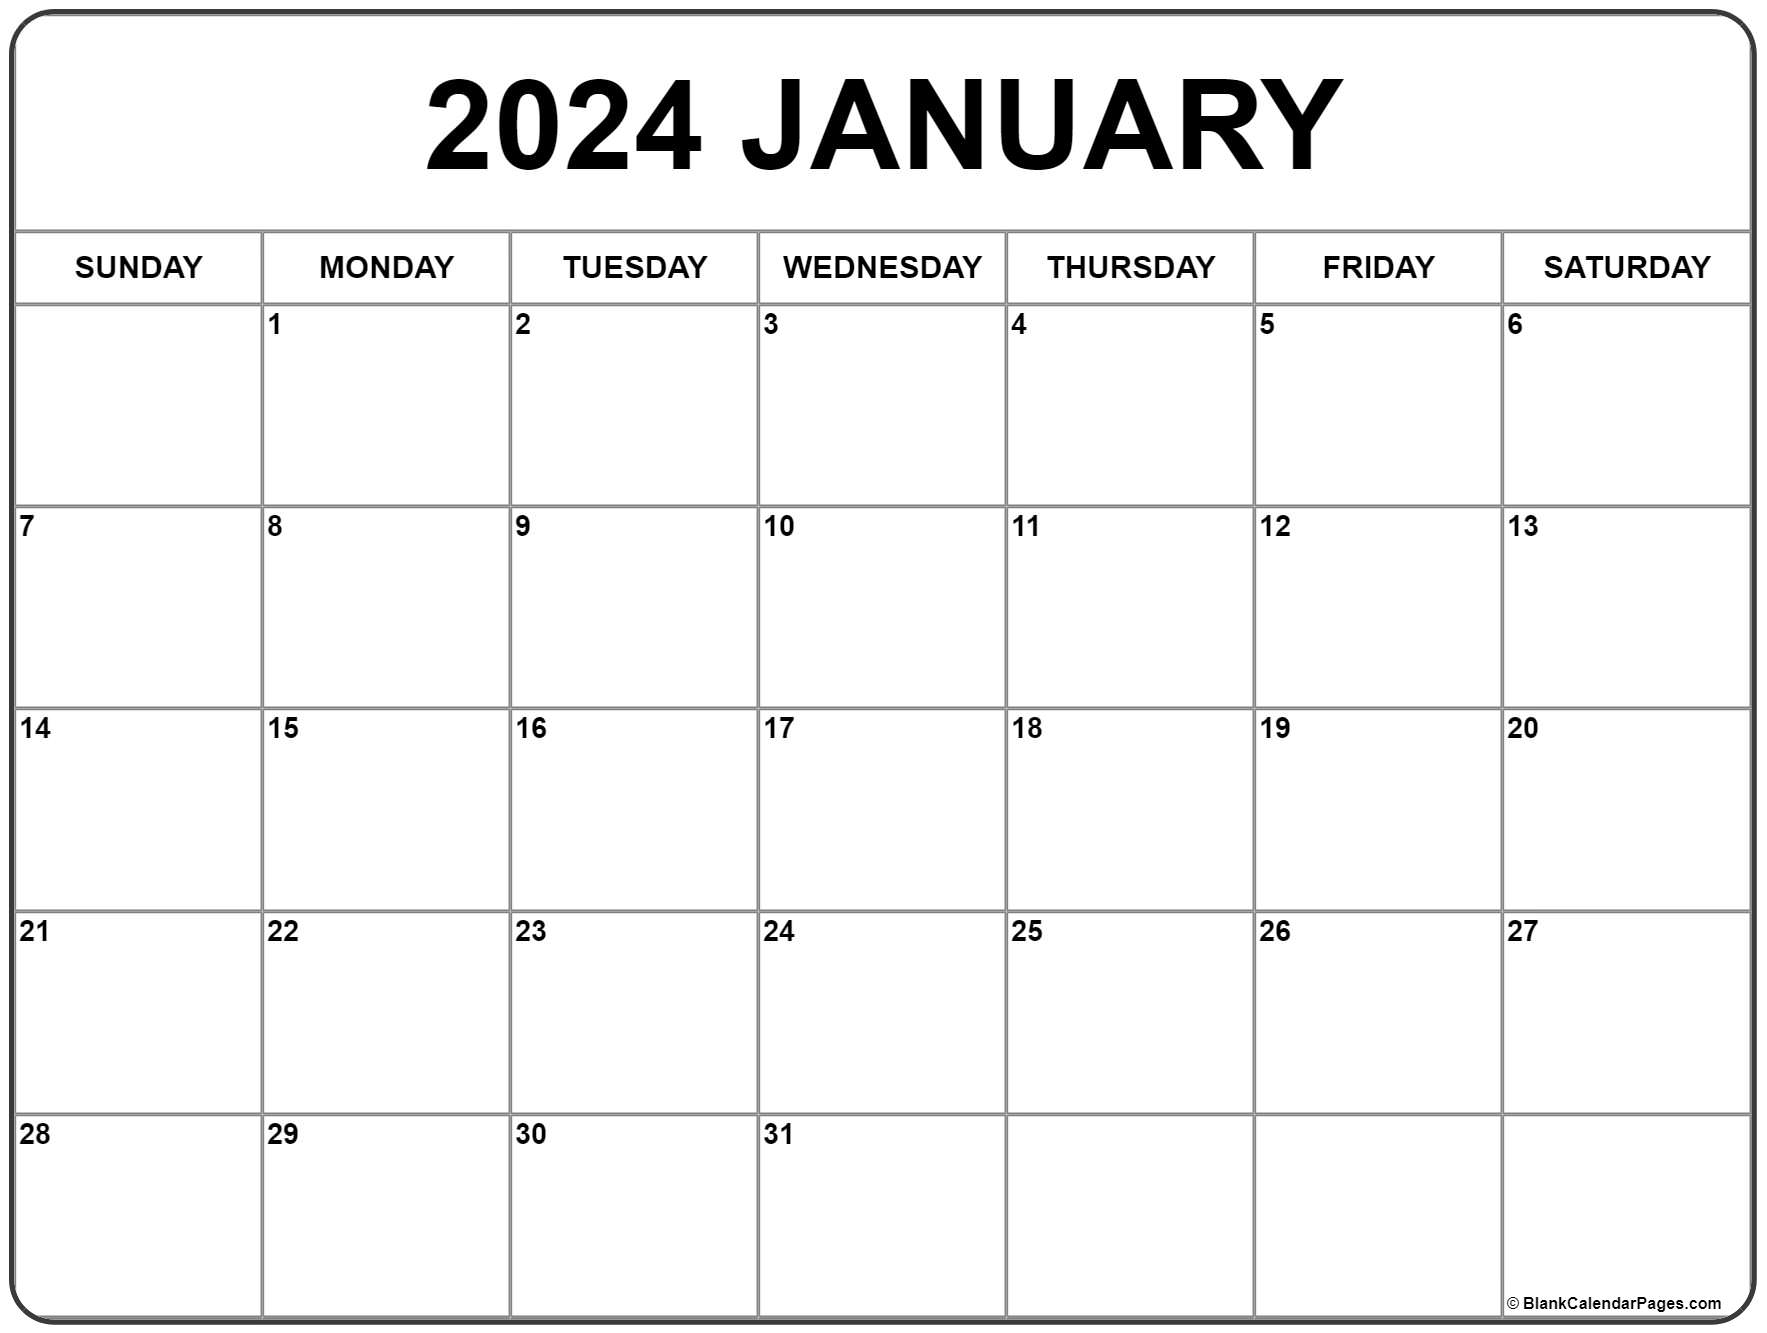 January 2021 calendar free printable calendar templates